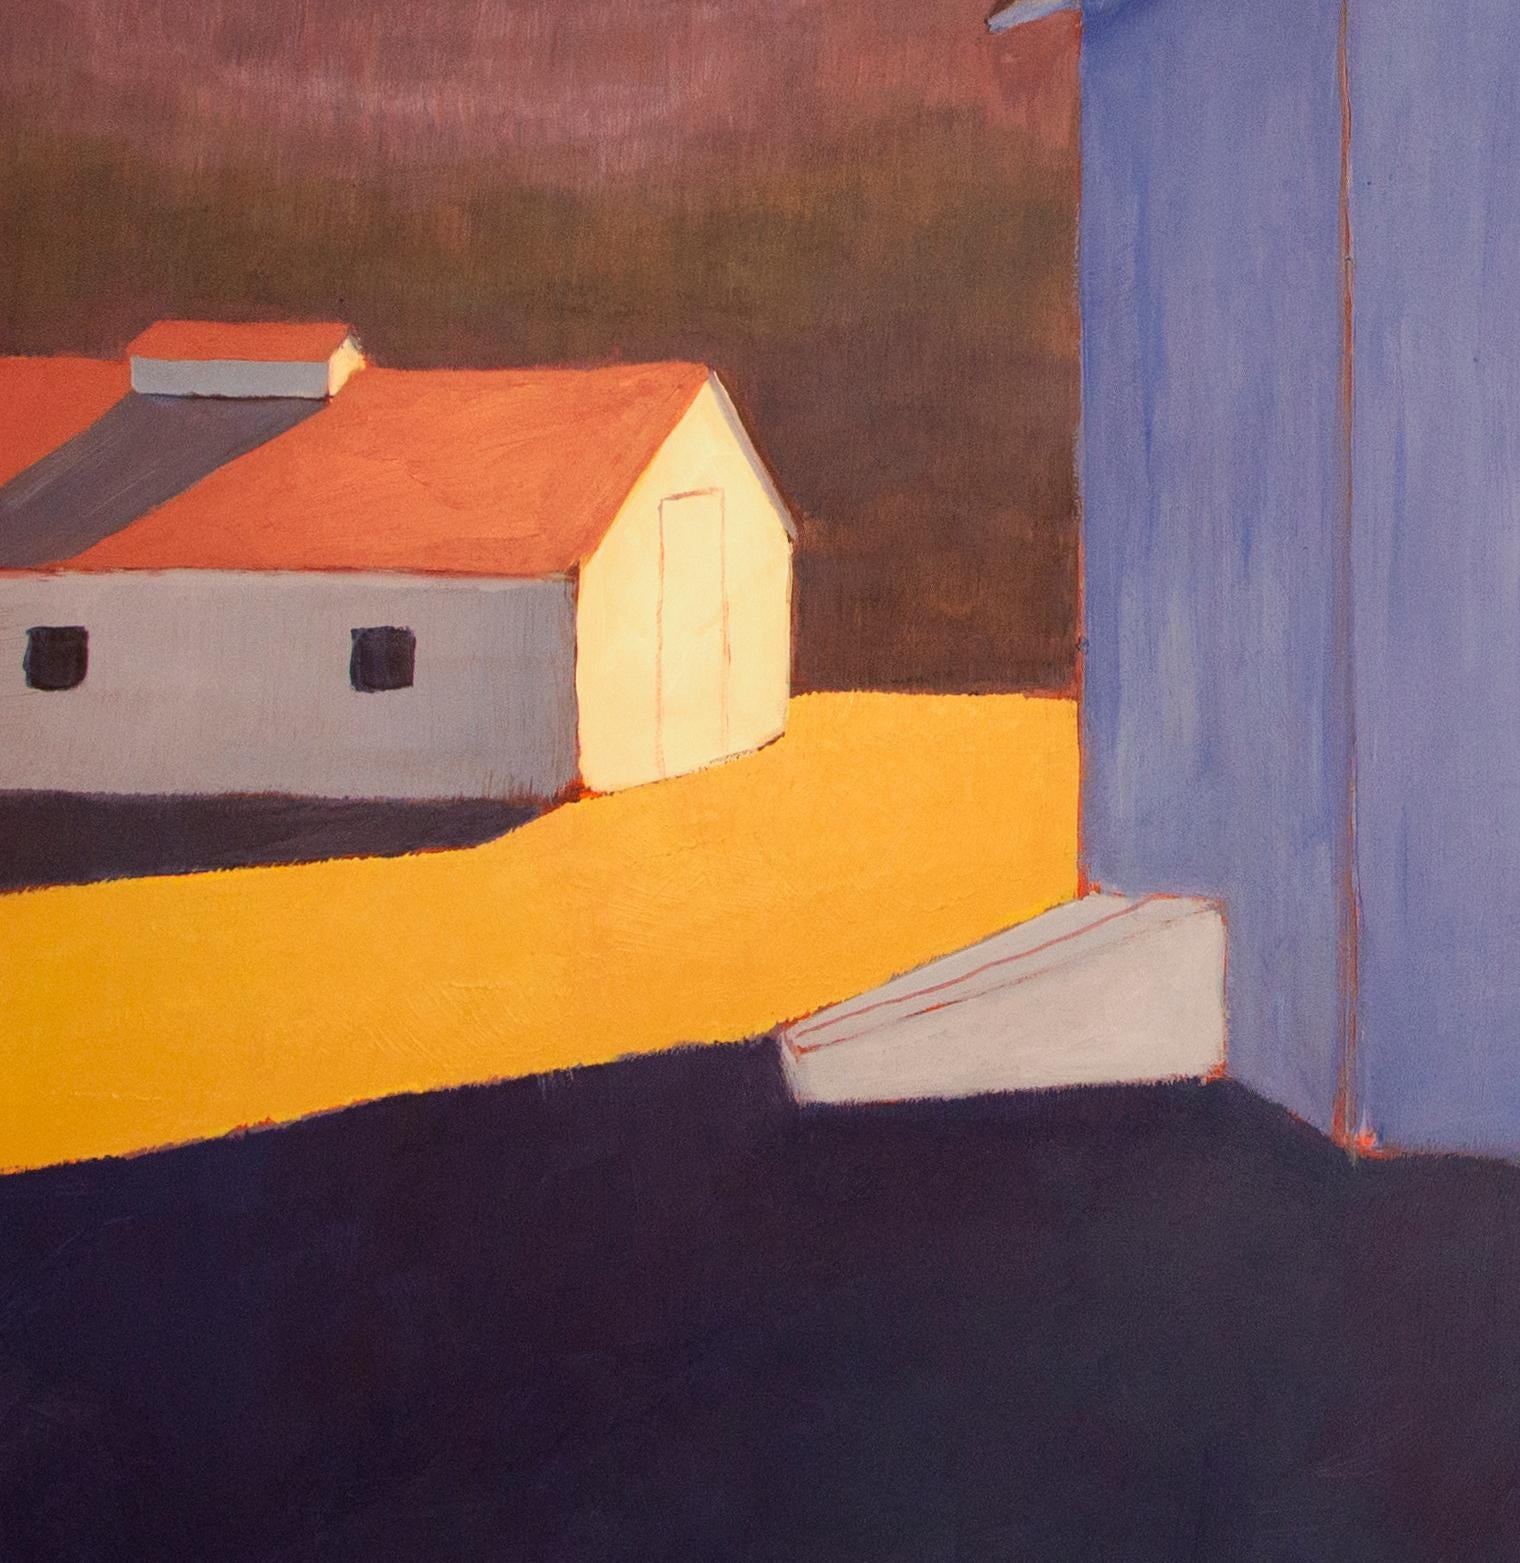 abstract barn paintings